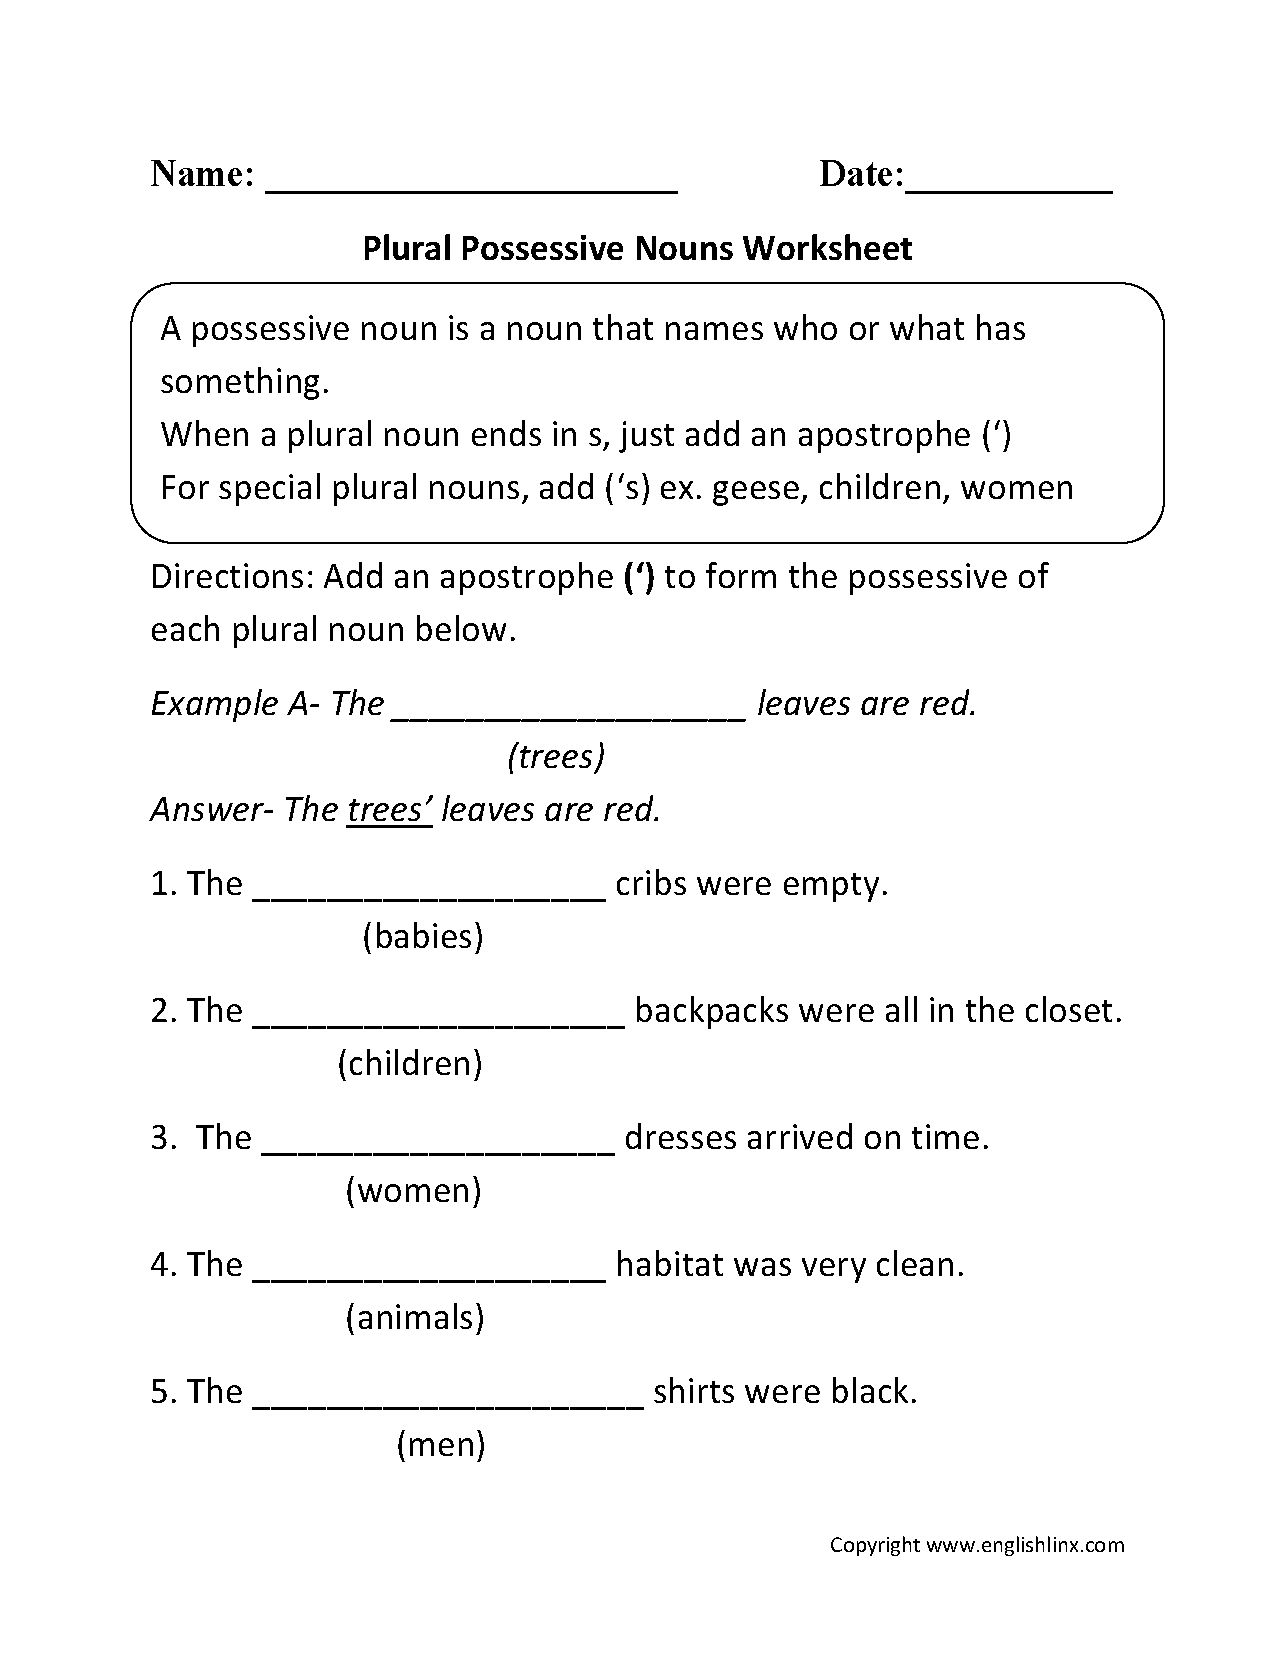 pronoun-agreement-worksheet-pdf-db-excel